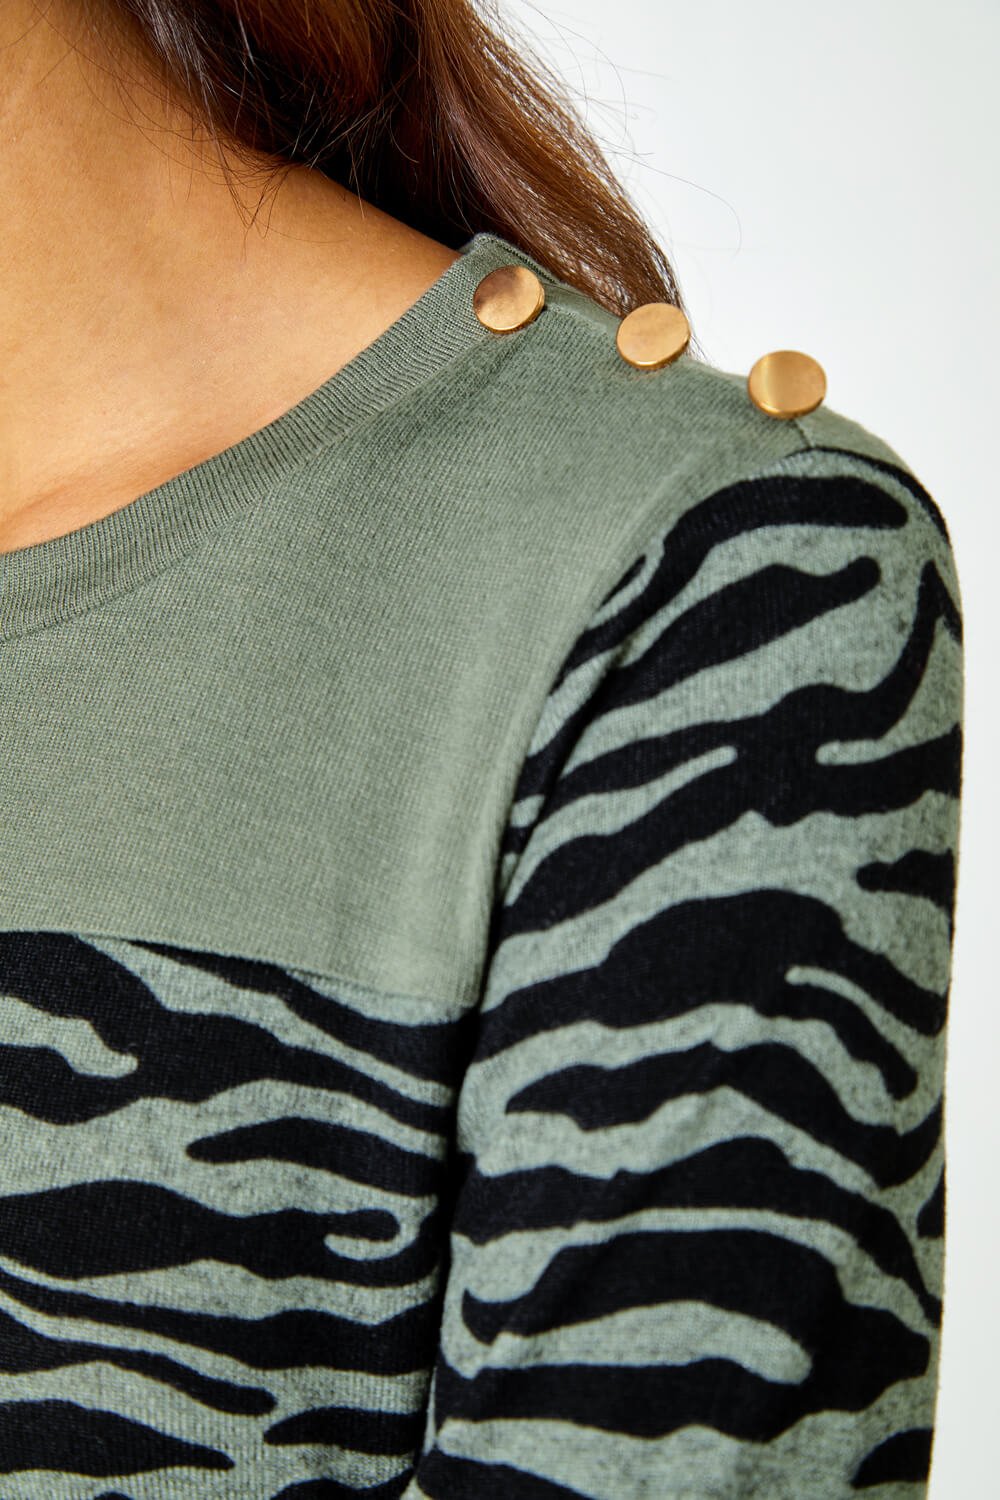 KHAKI Zebra Print Button Detail Stretch Swing Dress, Image 5 of 5